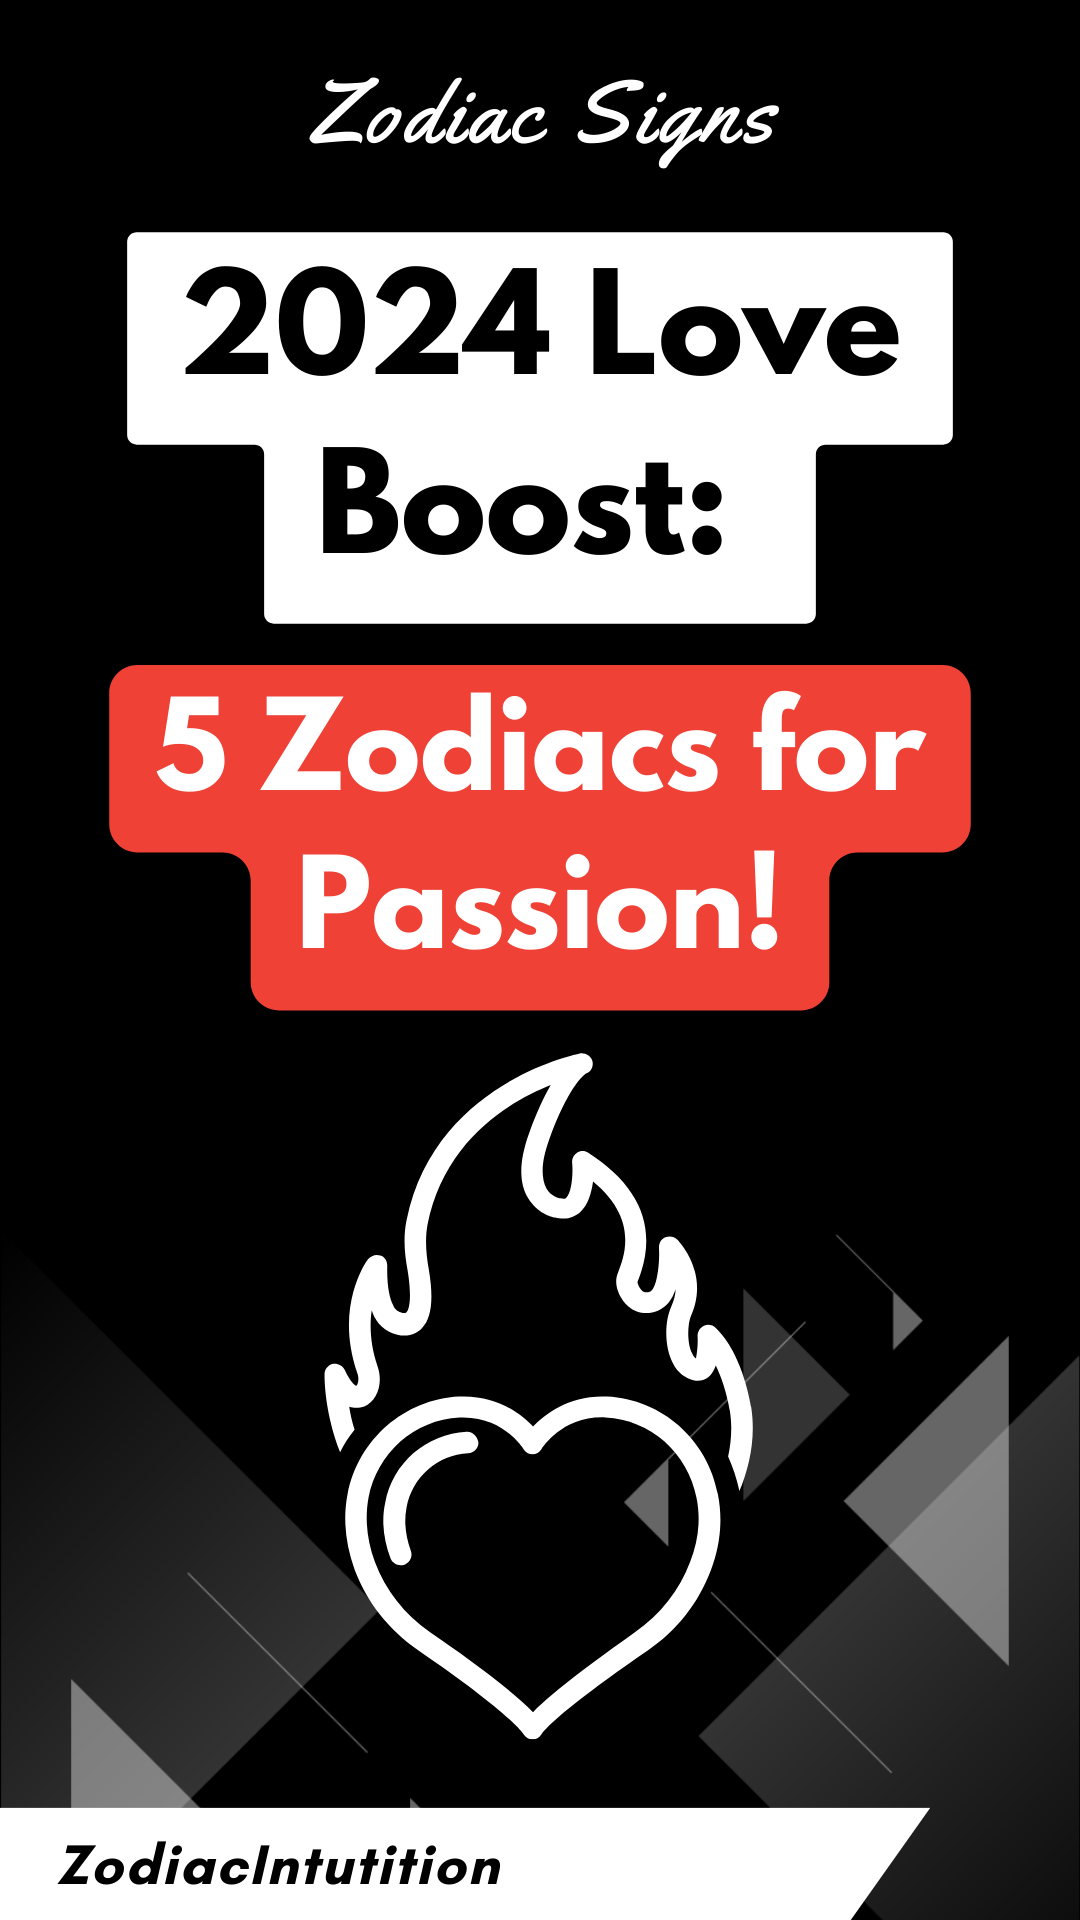 2024 Love Boost: 5 Zodiacs for Passion!